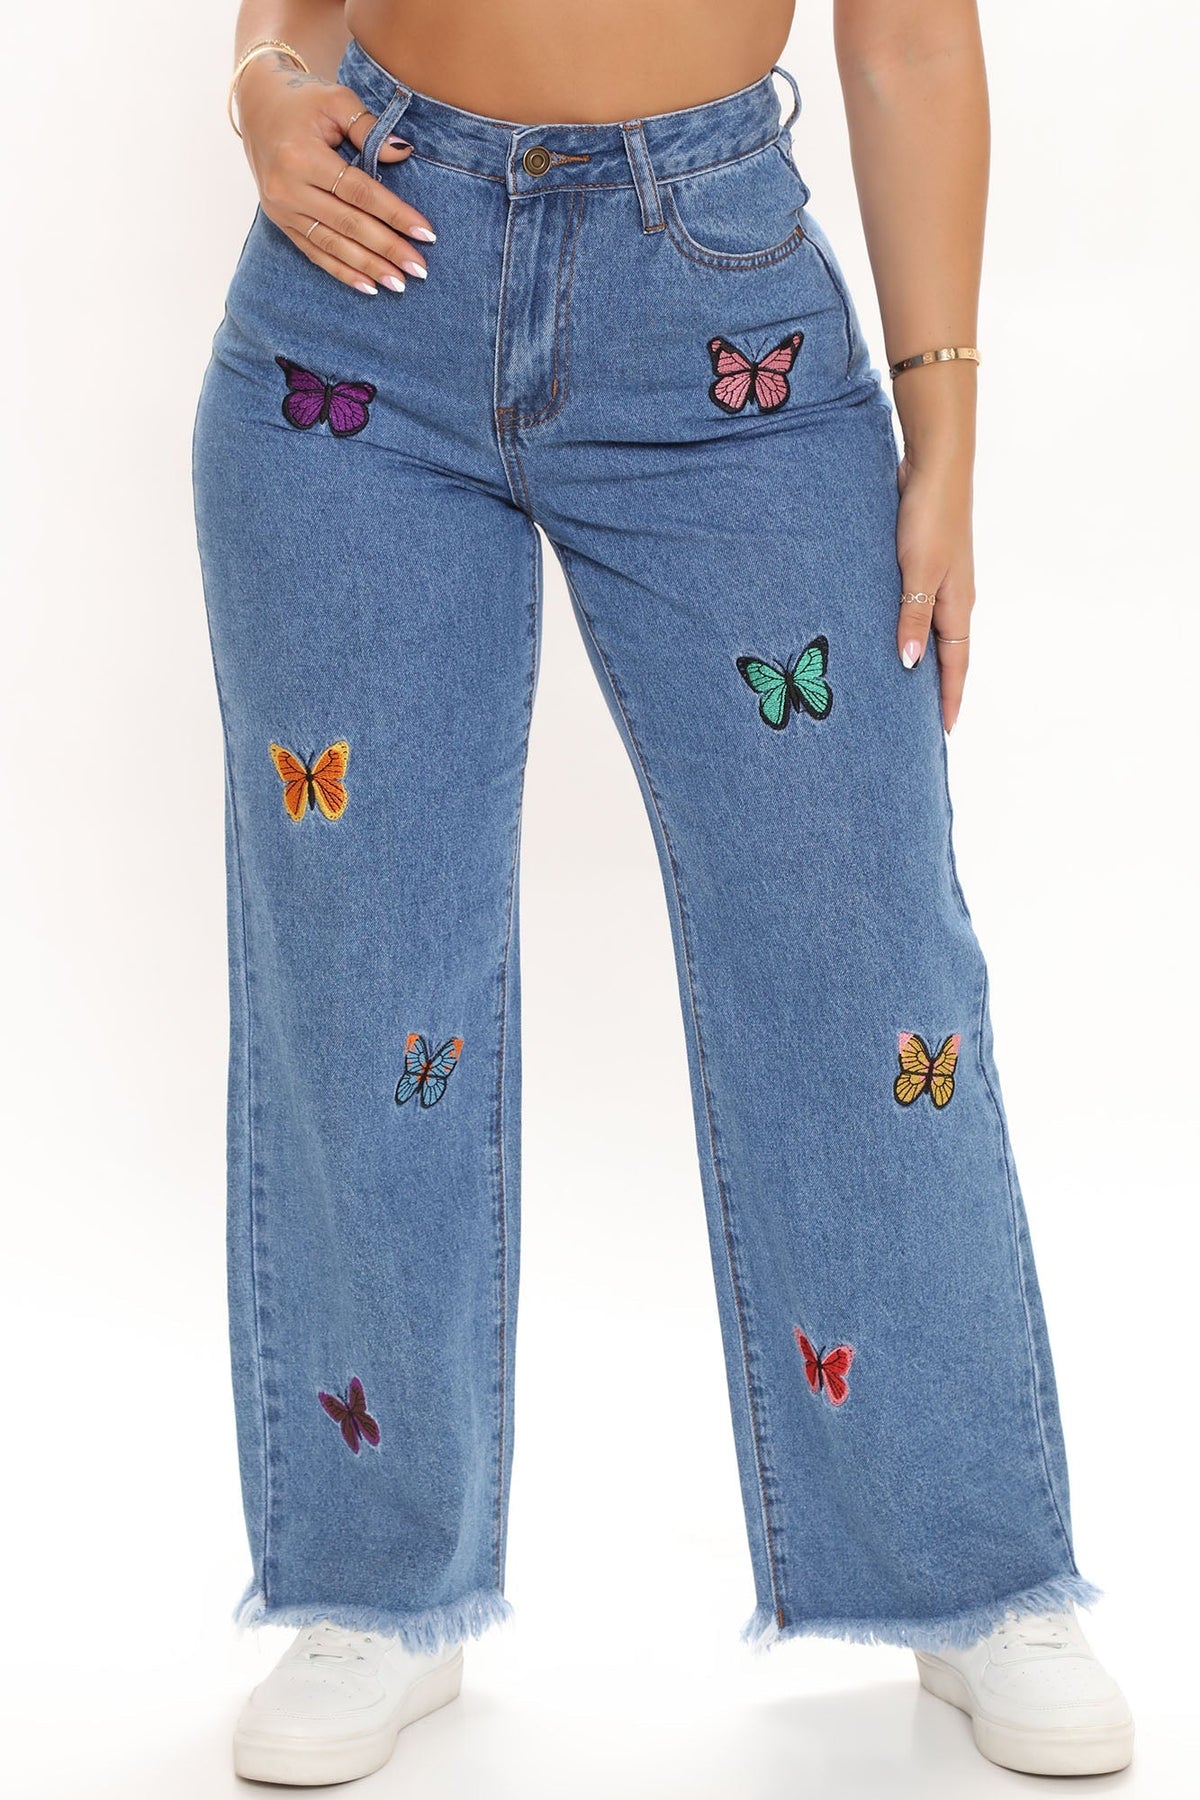 On Butterfly Wings Straight Leg Jeans - Medium Blue Wash